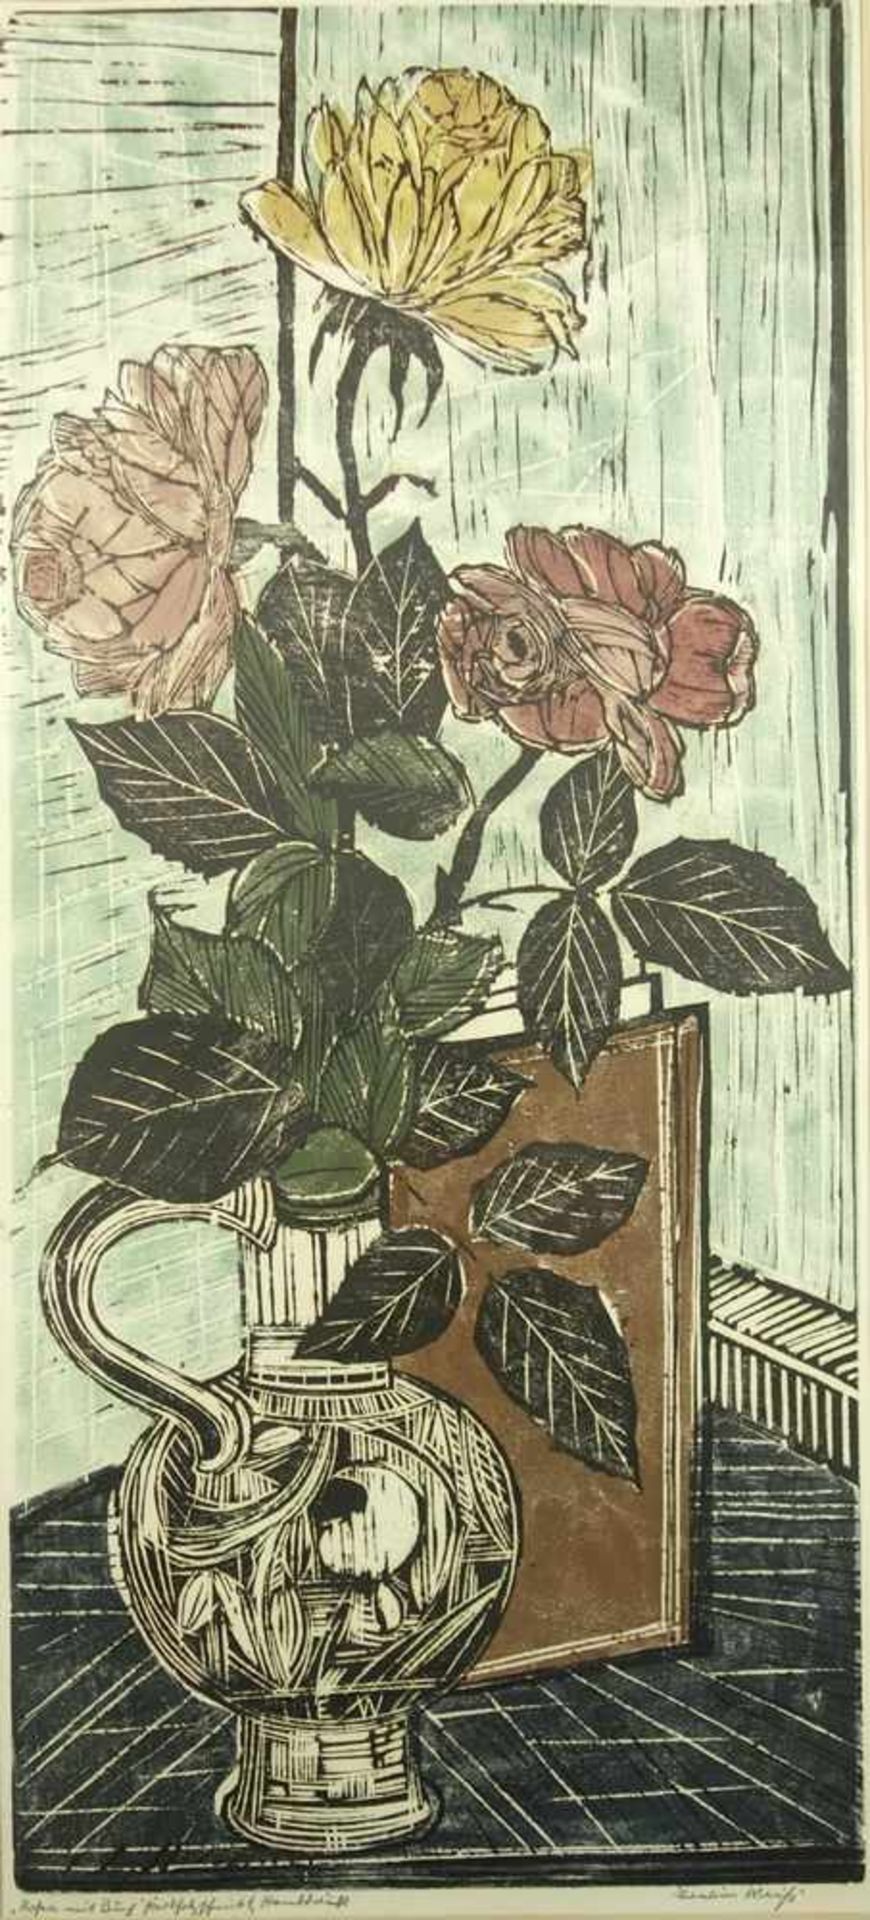 Erwin Weiß (1899, Dresden - 1979, Erfurt), "Rosen mit Buch", Farbholzschnitt, unten links betitelt